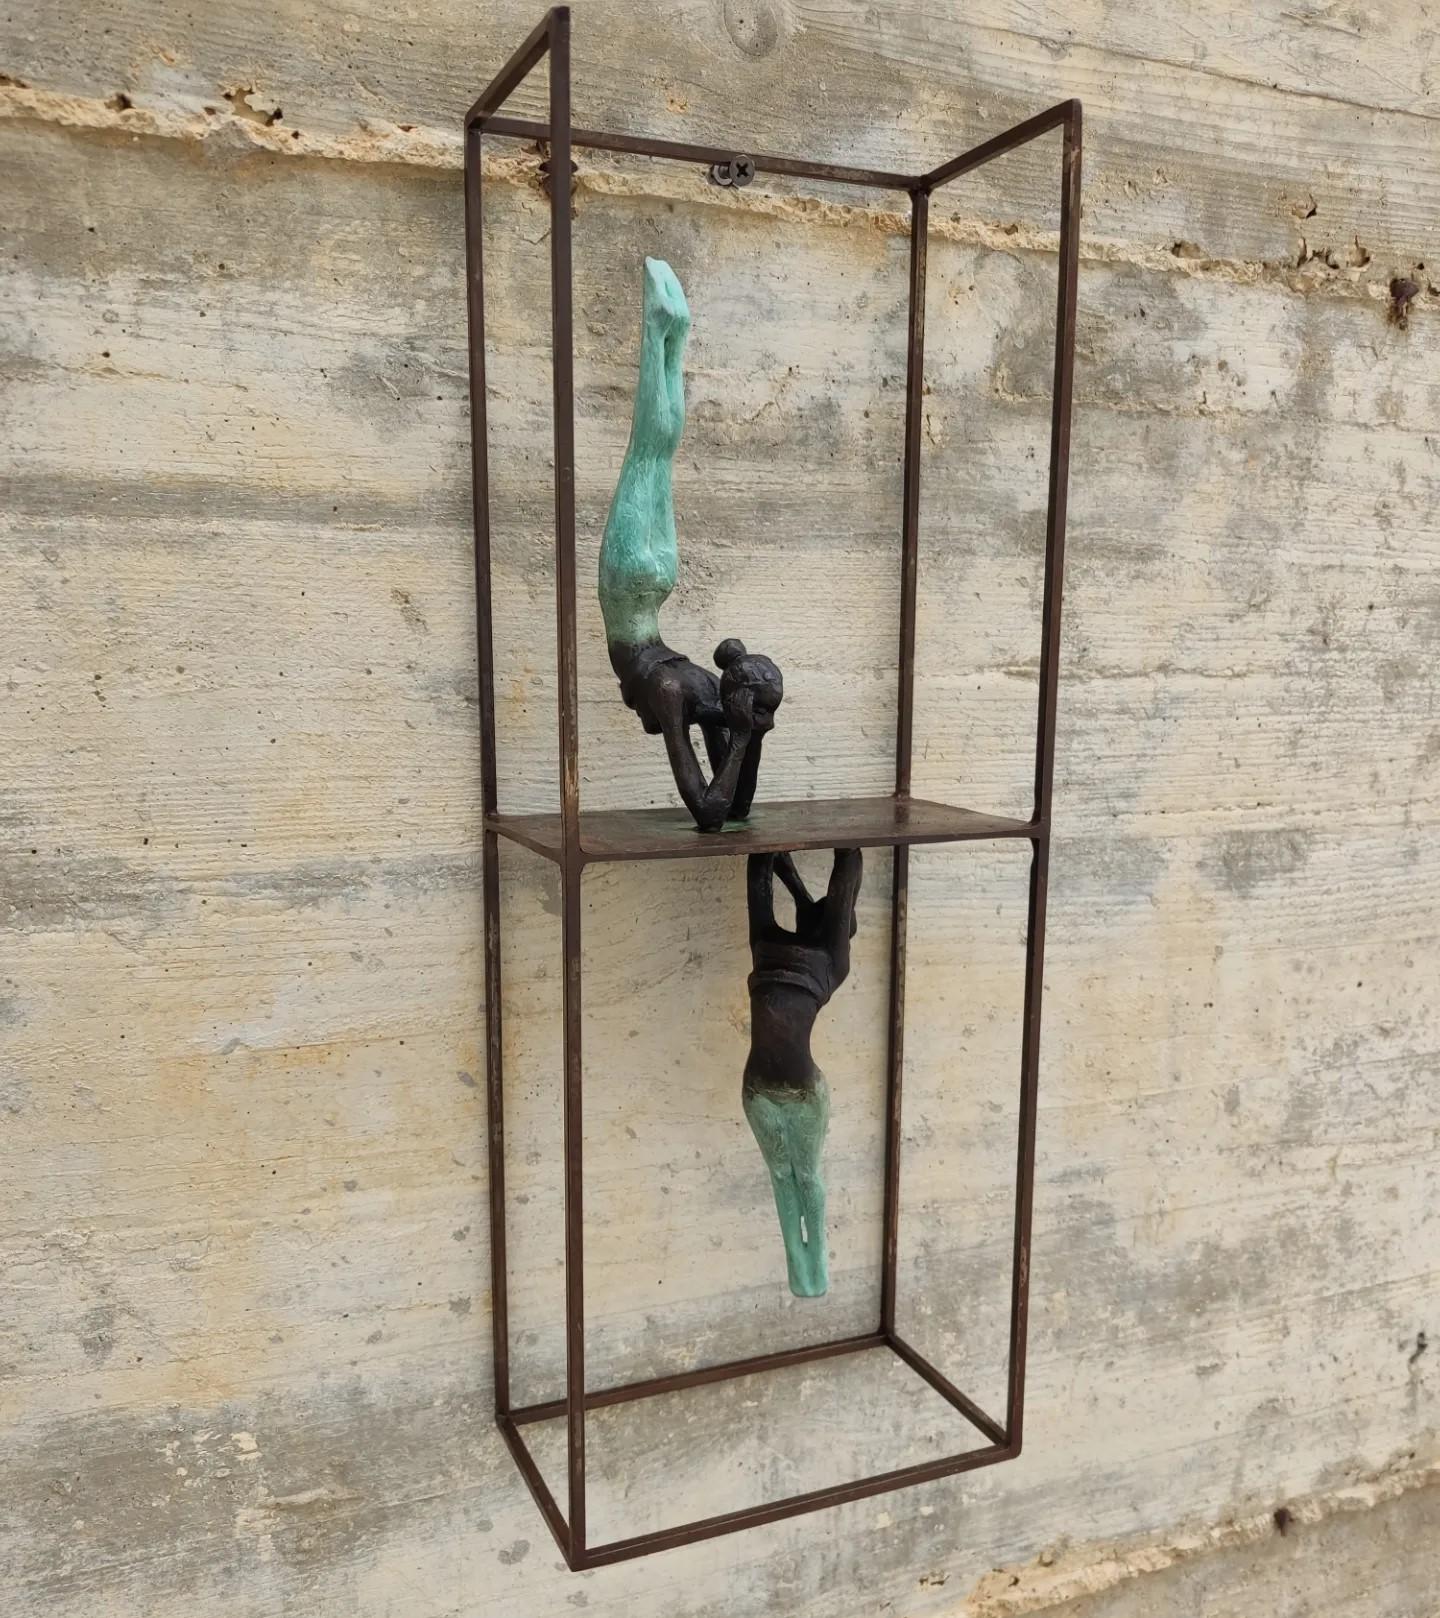 Joan Artigas Planas Figurative Sculpture - "Shadow" contemporary bronze table wall sculpture figurative reflection sensuous